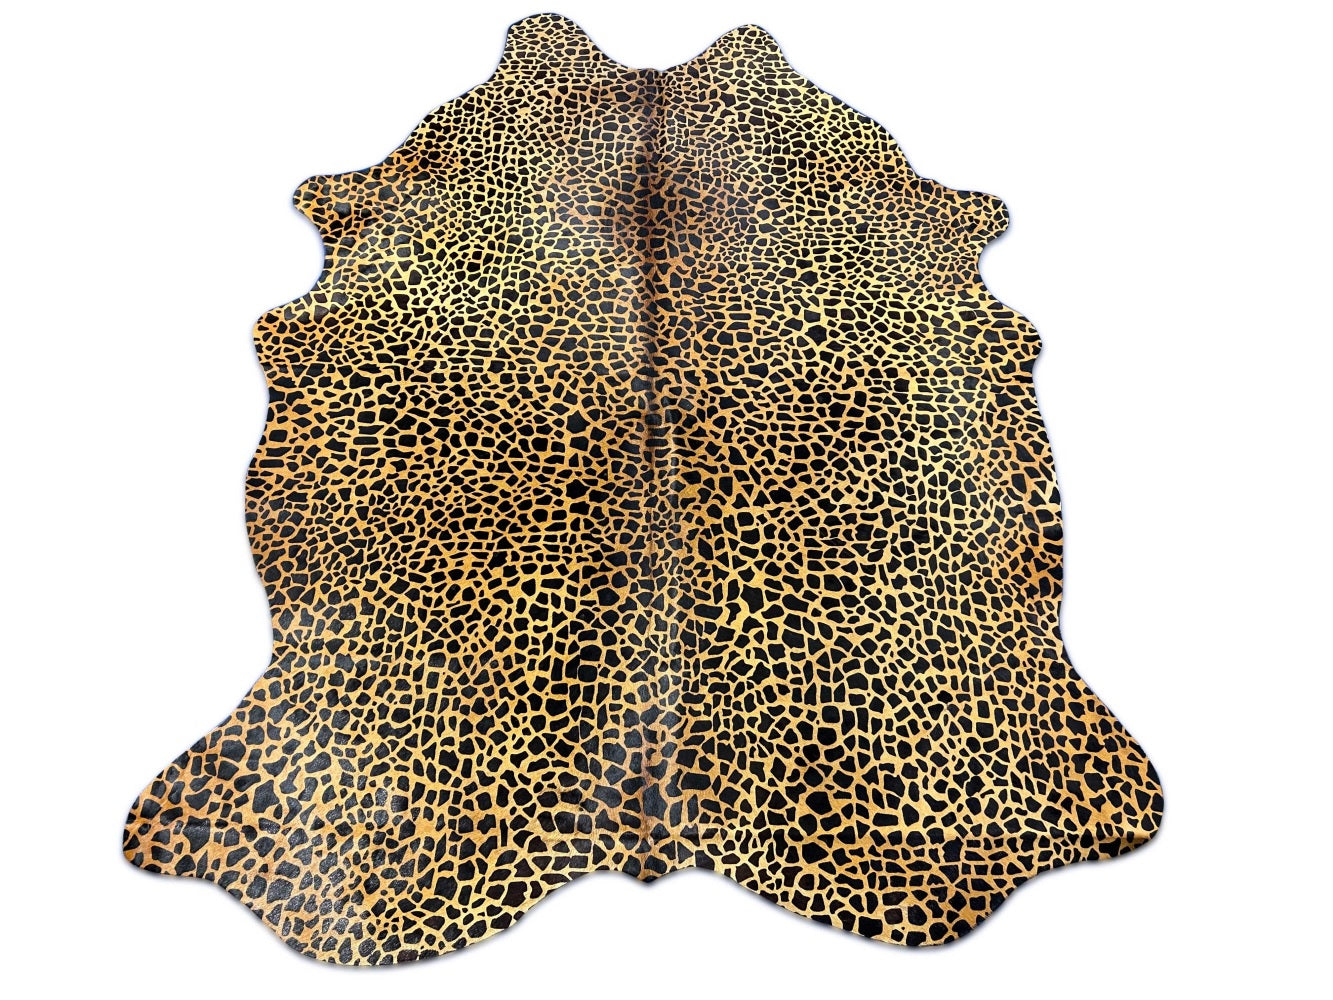 Giraffe Print Cowhide Rug Size: 7.2x5.5 feet O-360